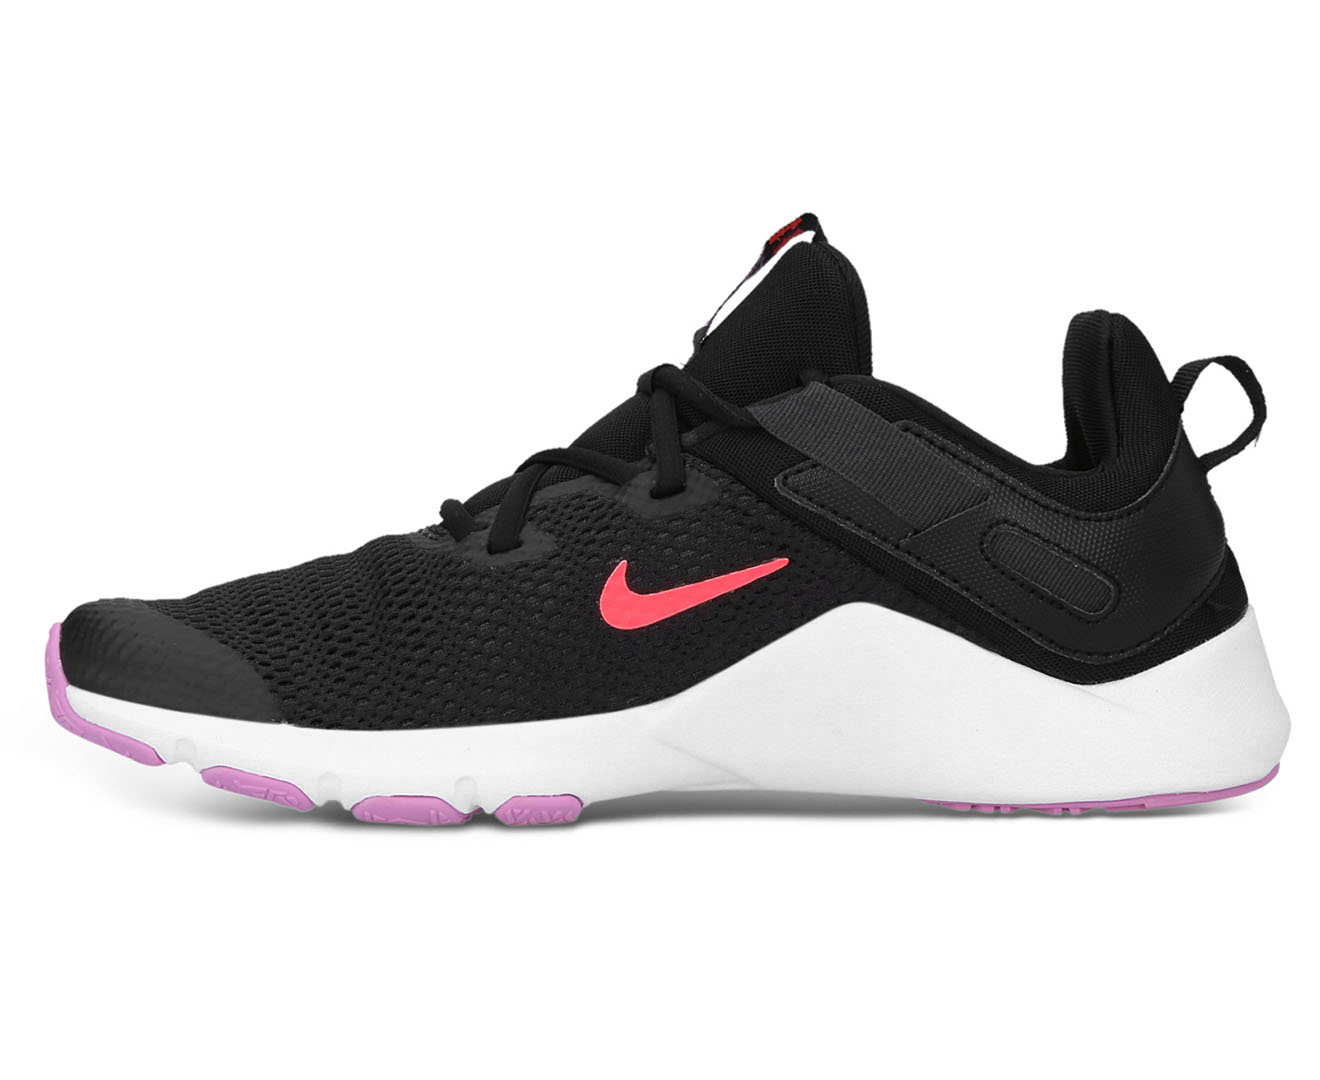 Nike Women's Legend Essential Training Shoes - Black/Flash Crimson | Catch.com.au